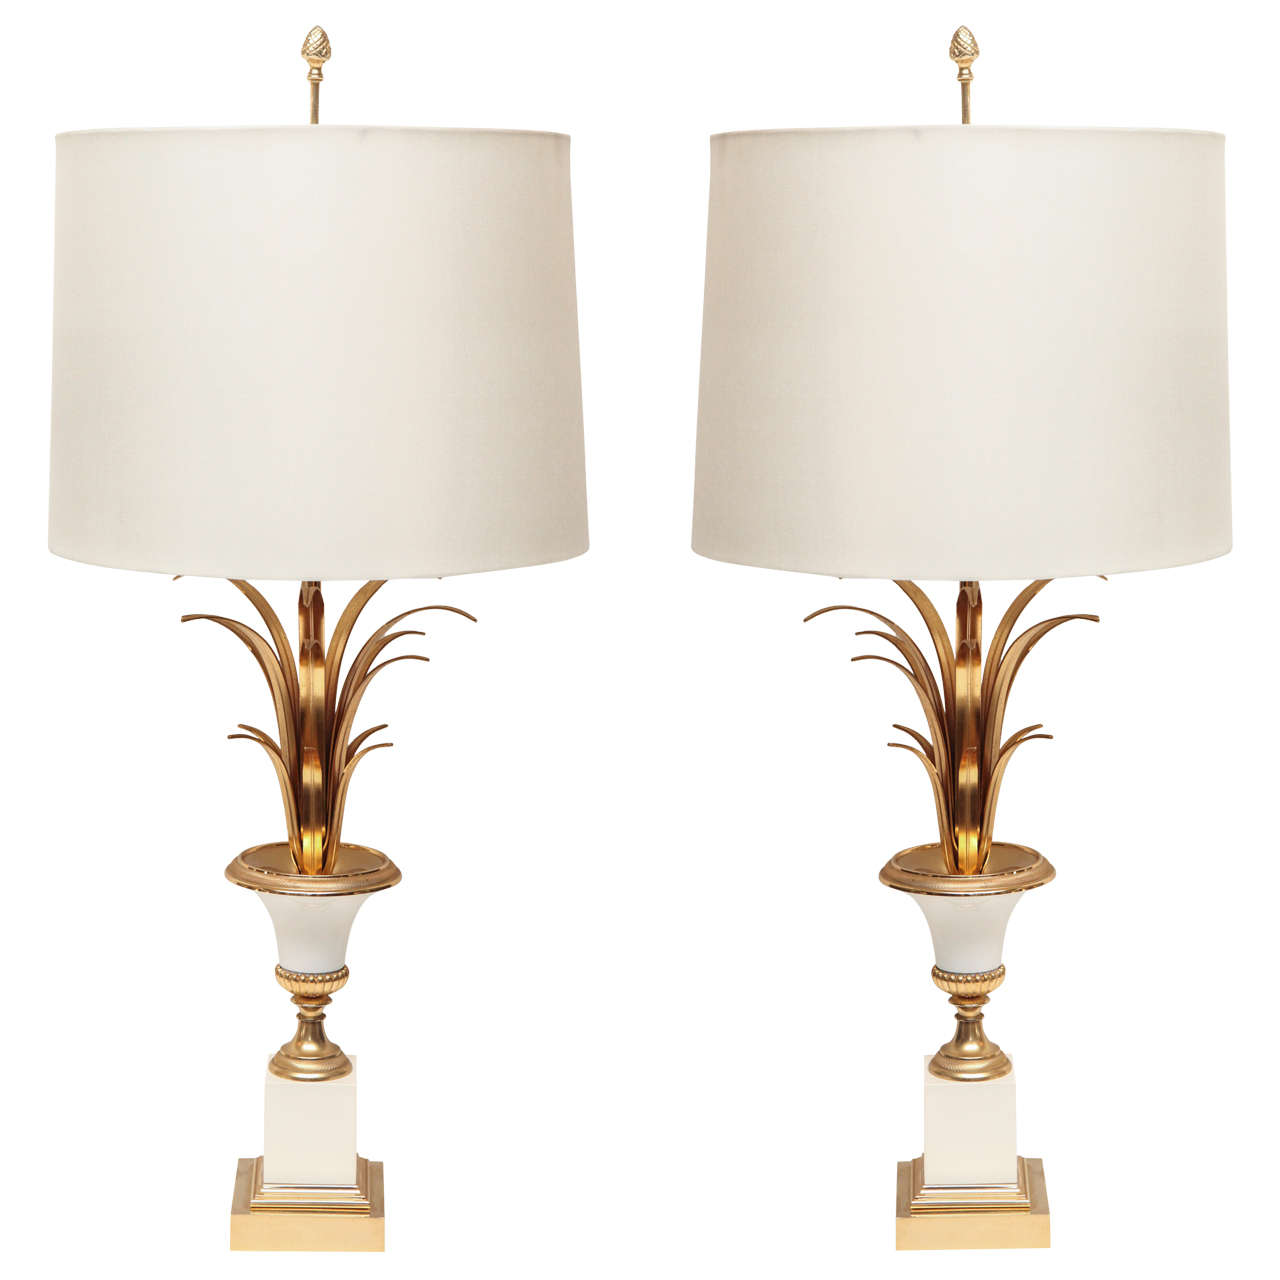 Pair of Maison Charles Gilt Bronze Lamps